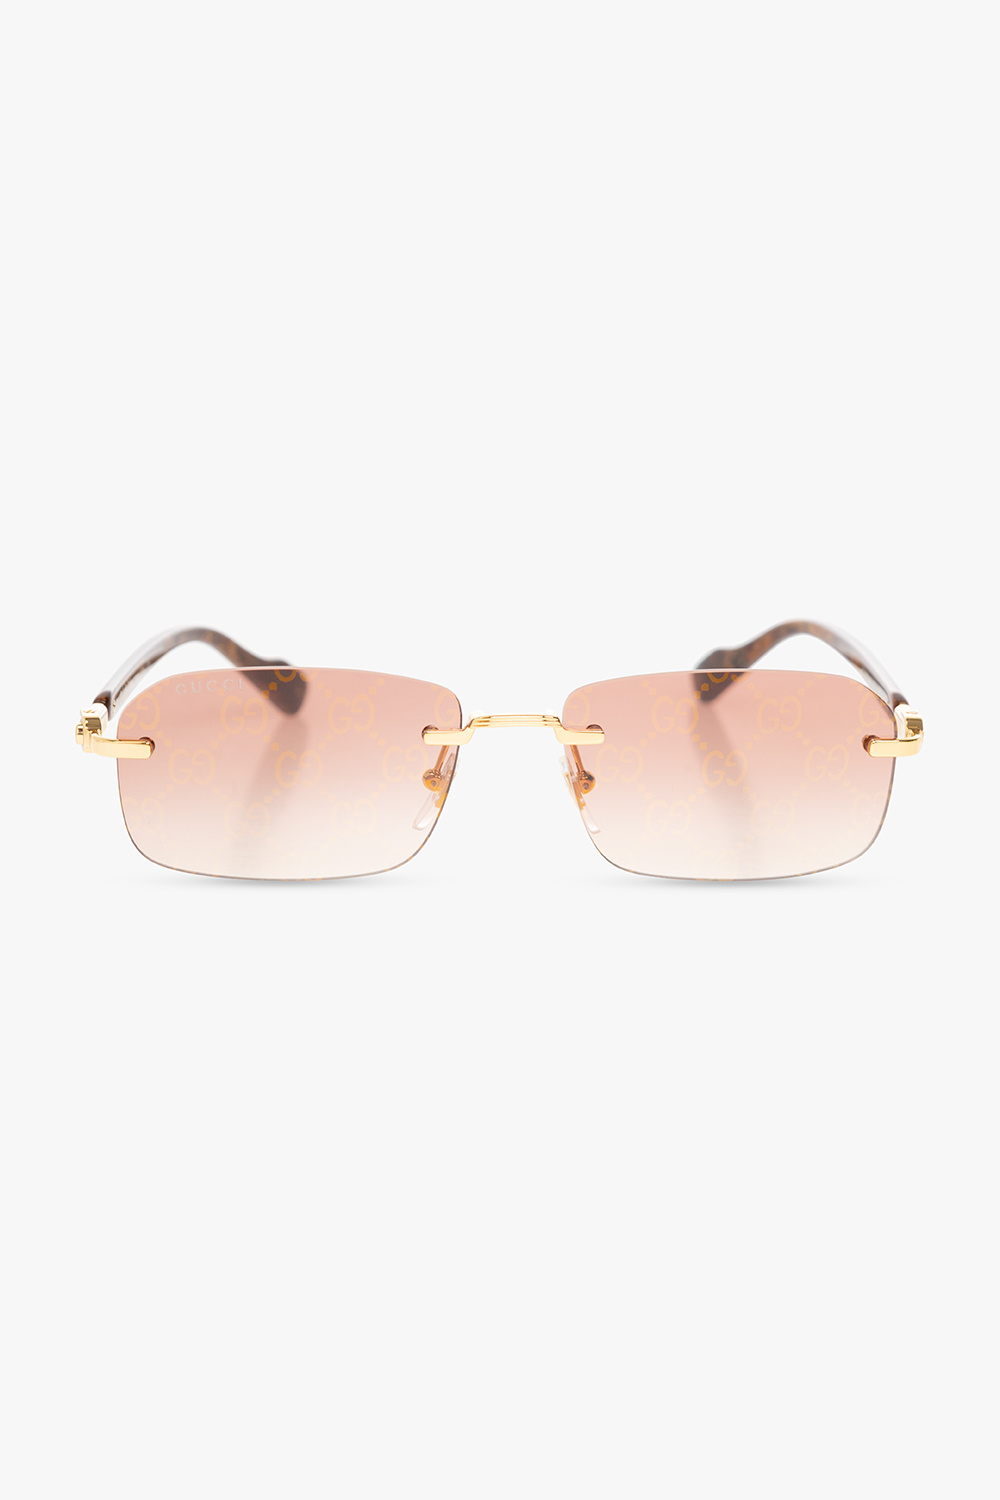 Gucci jimmy choo eyewear goldy round frame sunglasses item